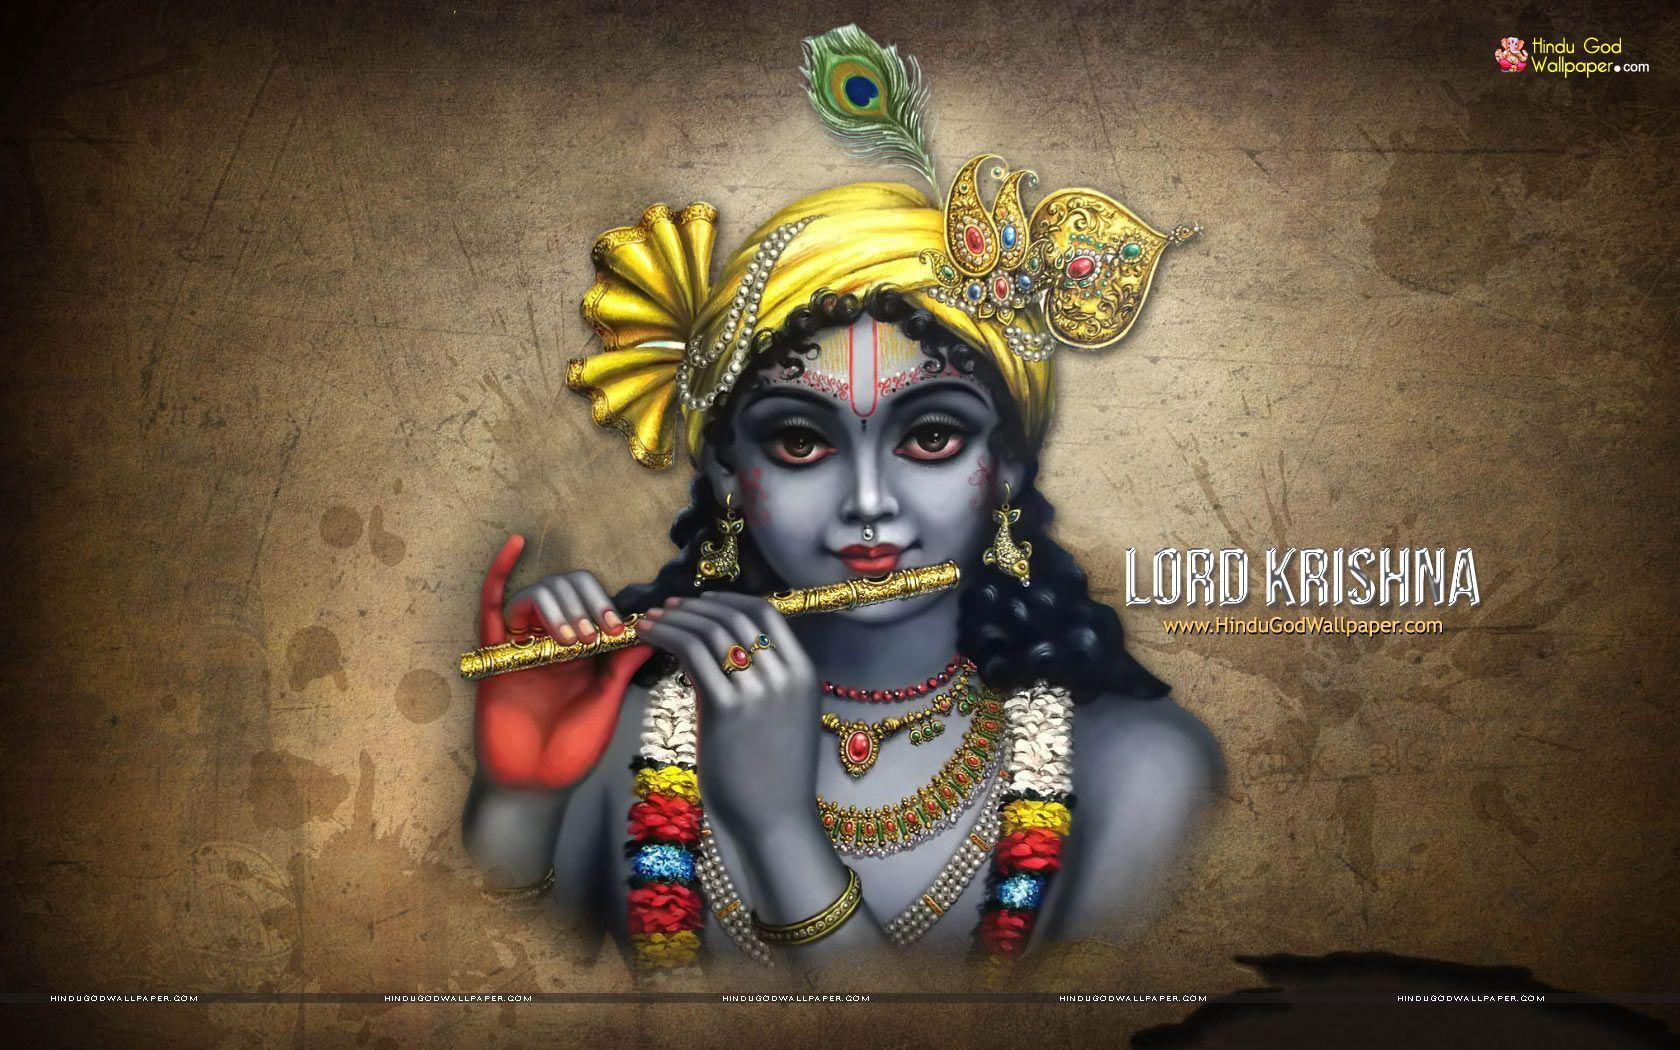 Hindu God Wallpaper Hd For Mobile Download - HinduWallpaper